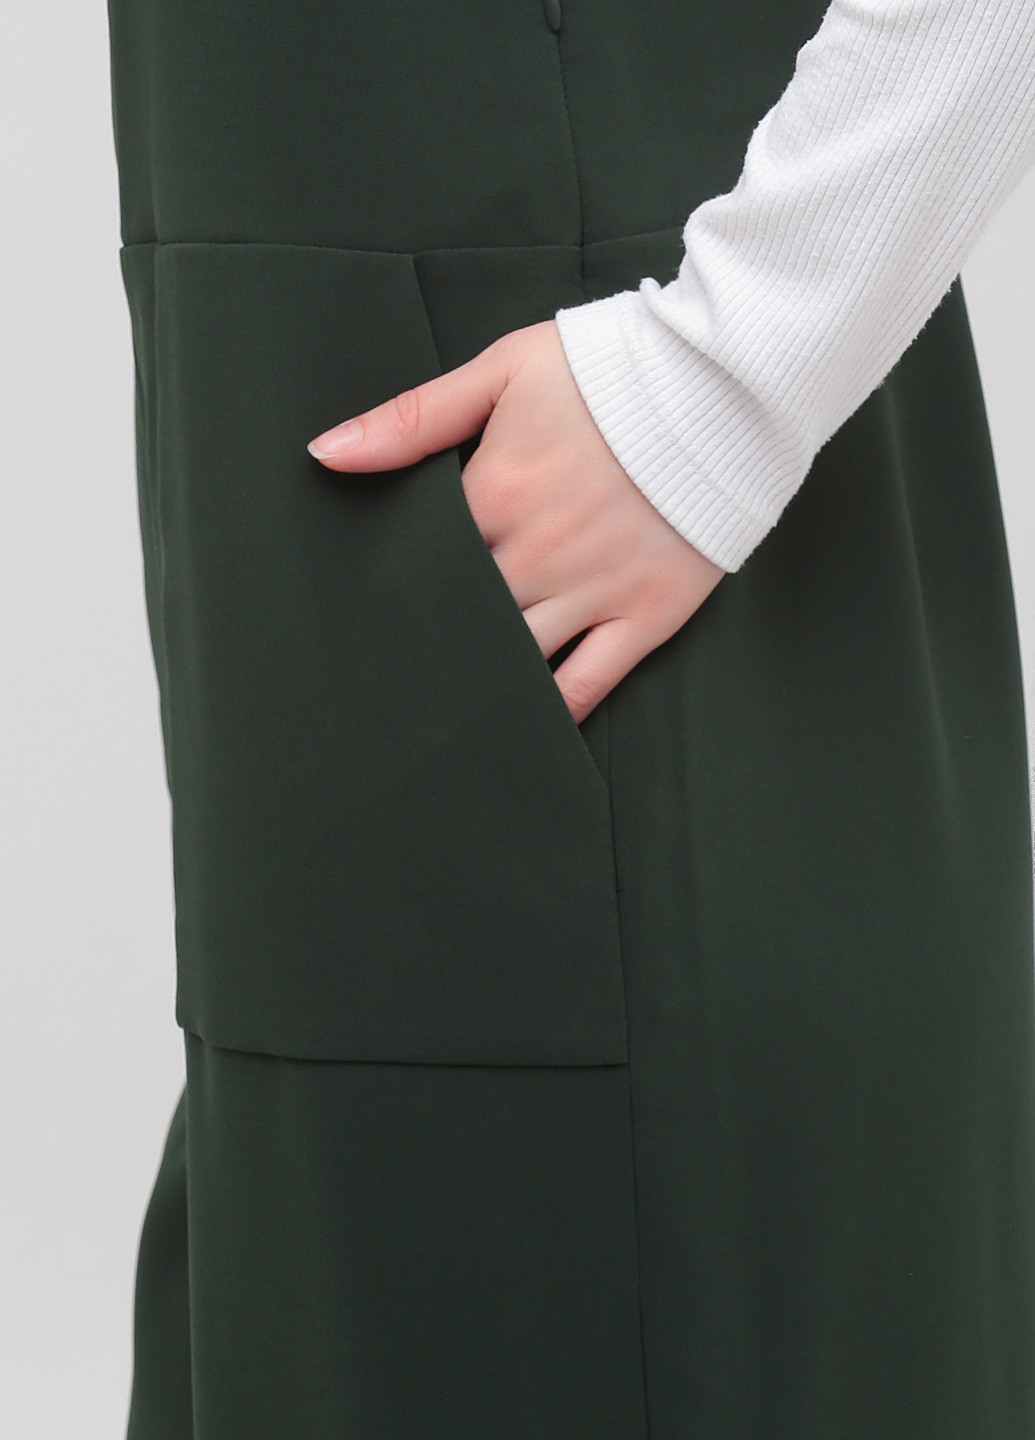 Комбинезон Vero Moda комбинезон-брюки однотонный темно-зелёный кэжуал полиэстер